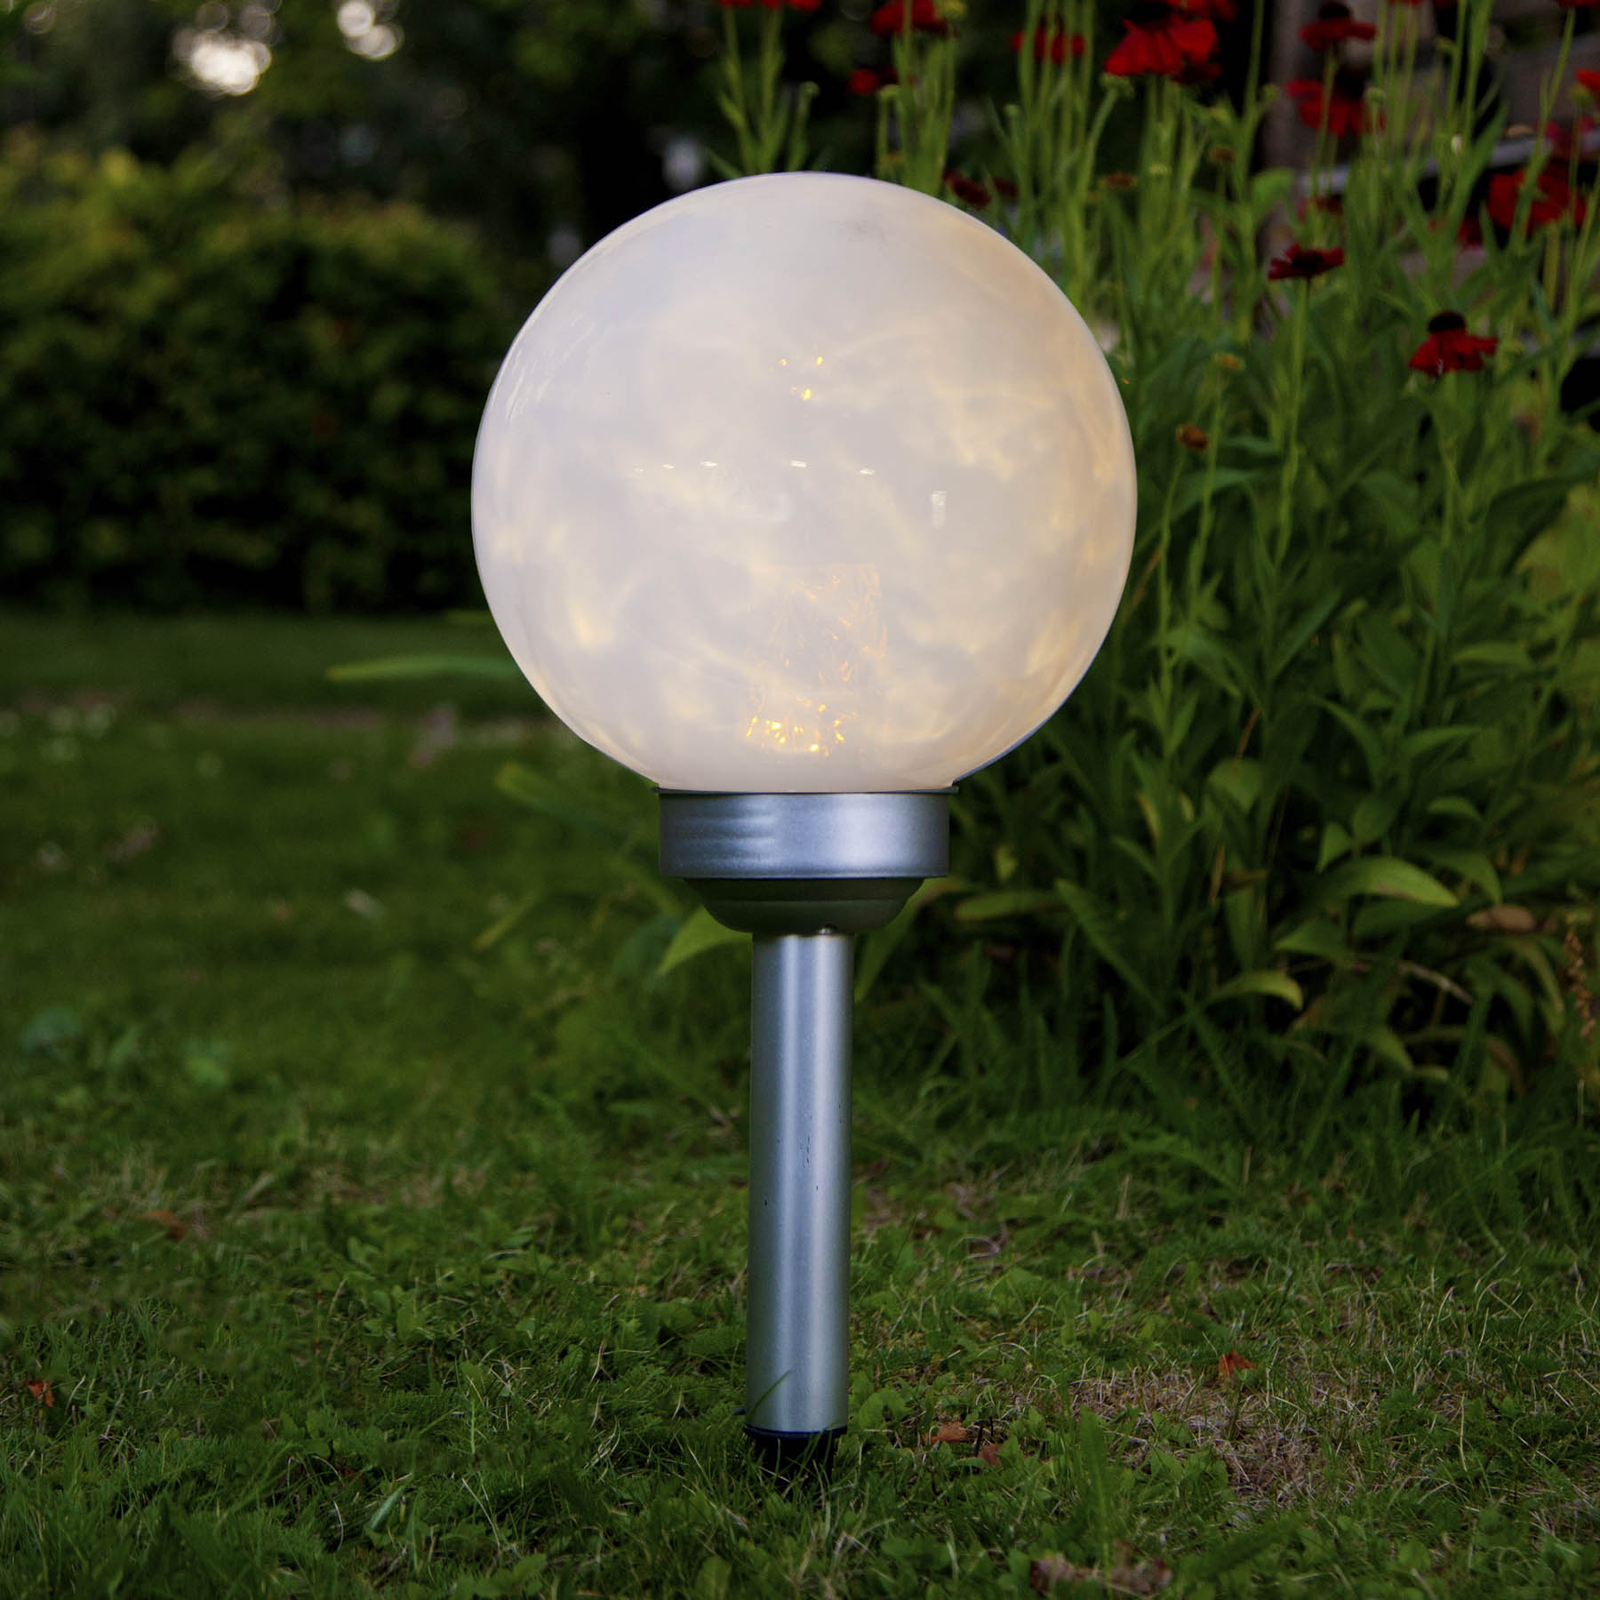 kijk in schroef hebzuchtig LED lamp op zonne-energie Lunay, draaiende lamp | Lampen24.nl